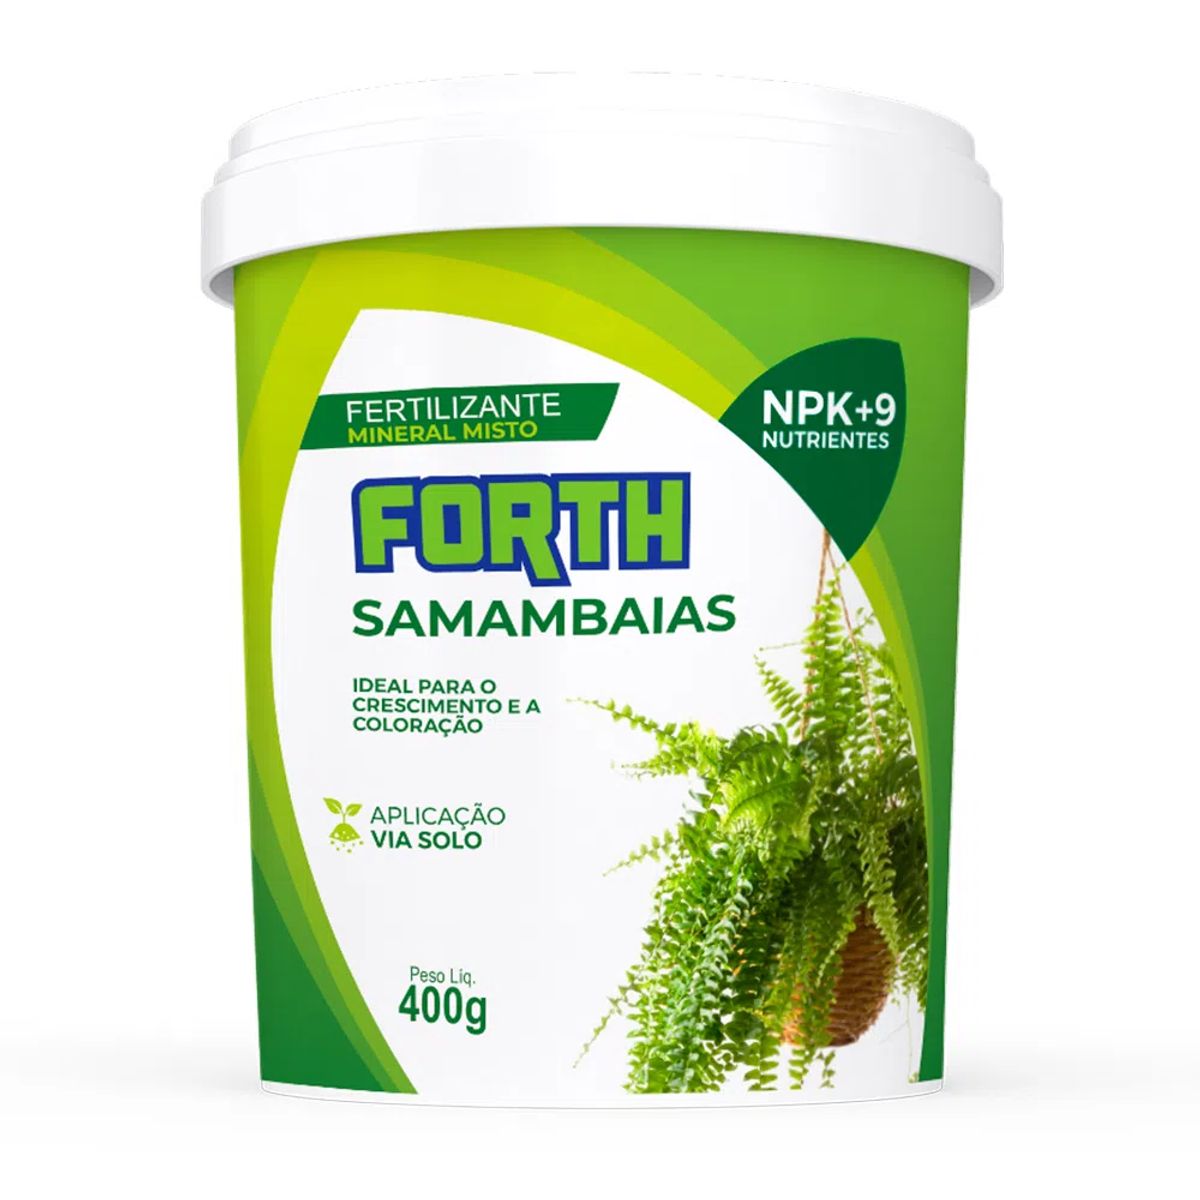 Fertilizante Mineral Forth Samambaias NPK+ 9 Nutrientes 400g